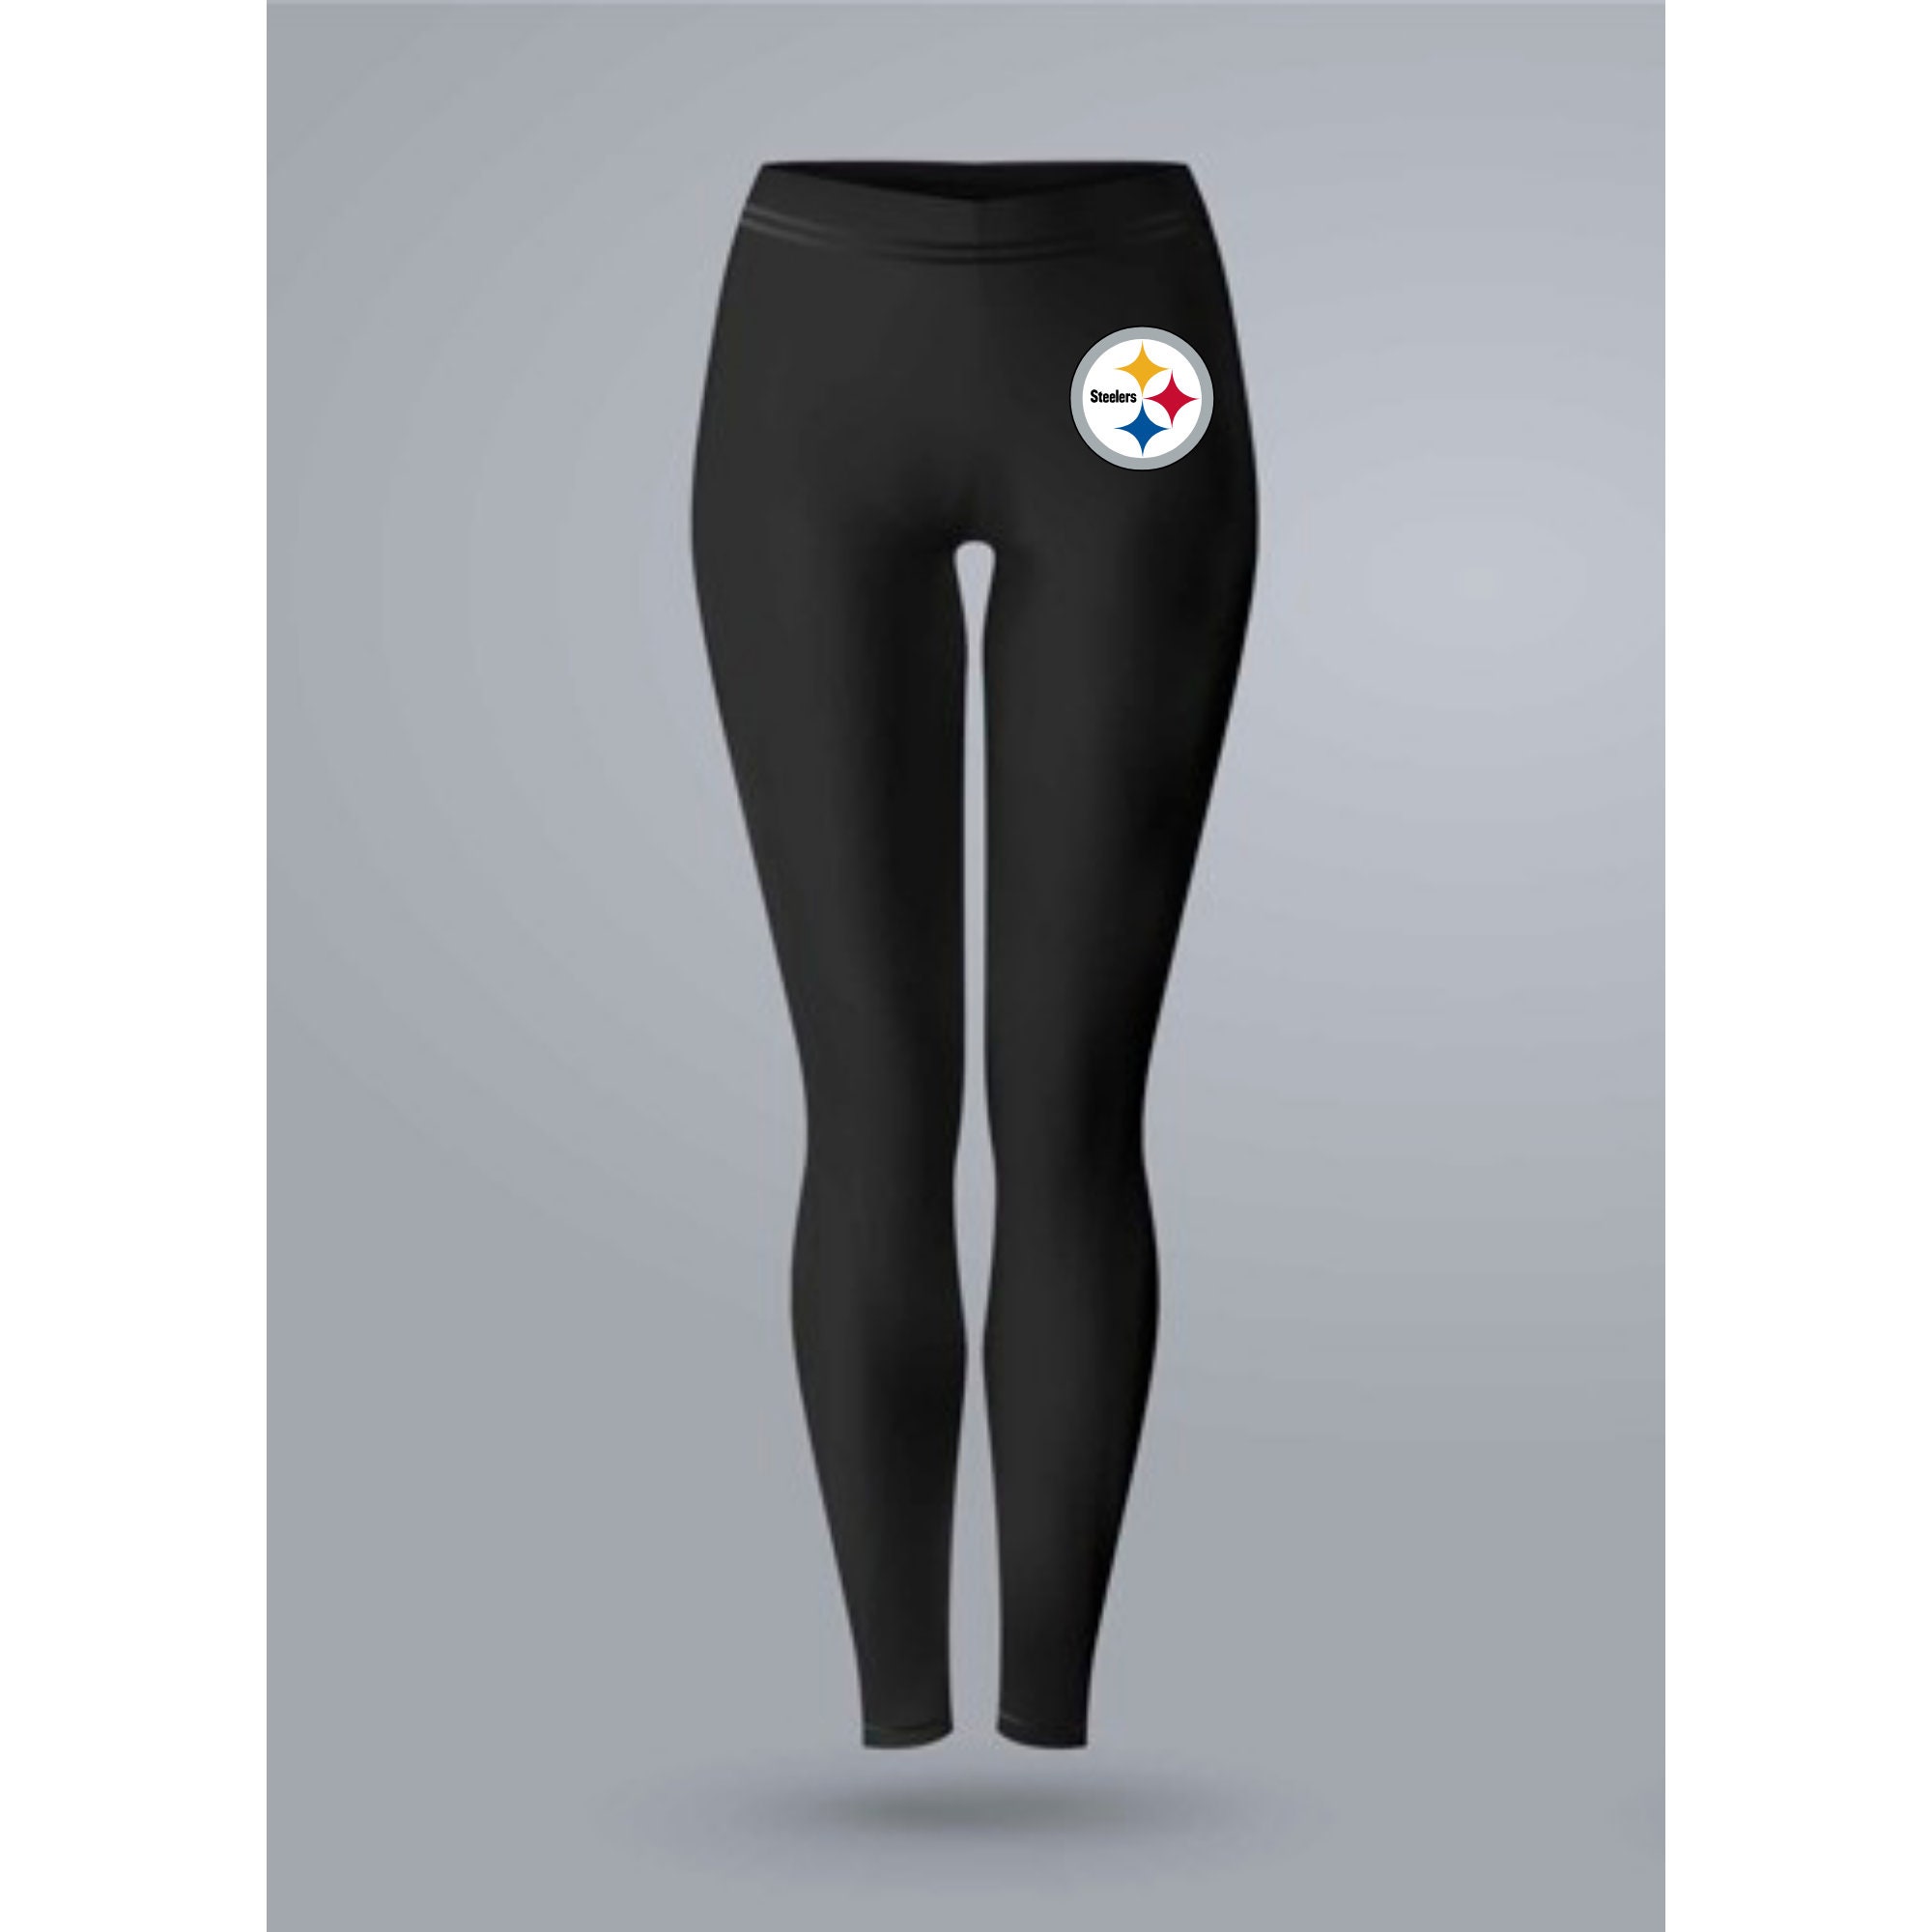 Pittsburgh Steelers Leggings Football Leggings Women's | Etsy